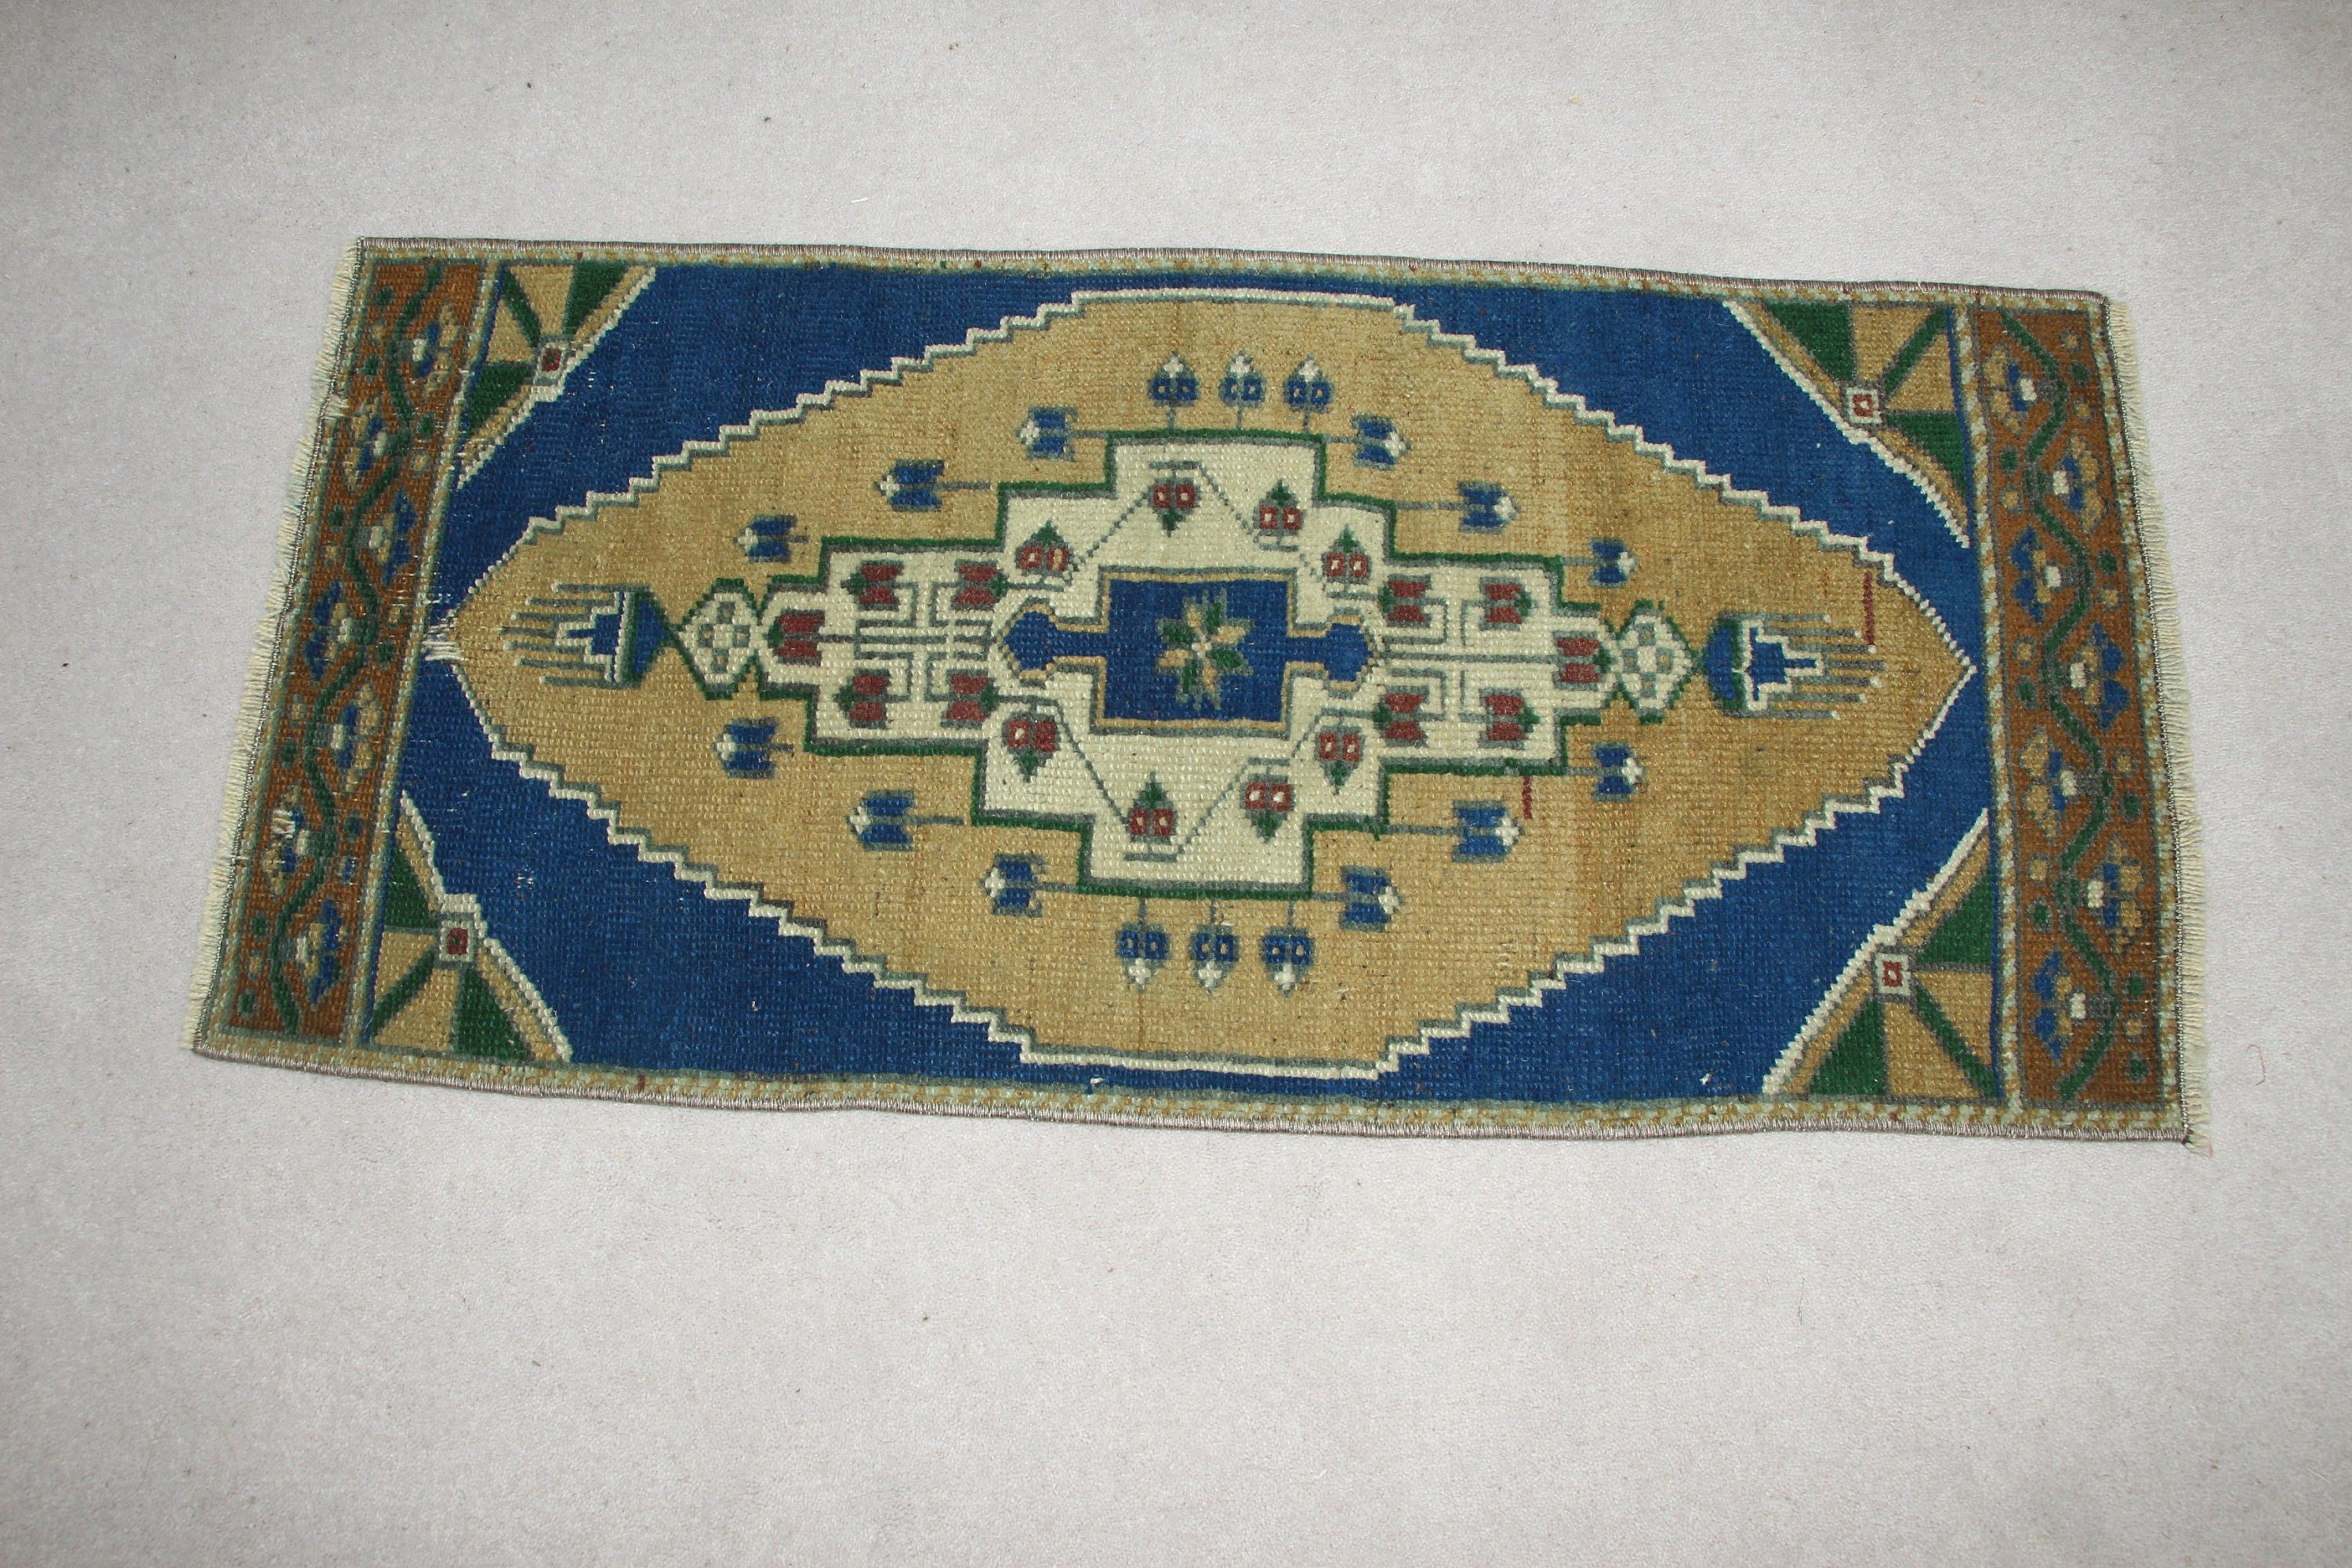 Car Mat Rug, Moroccan Rugs, Turkish Rugs, Blue  1.4x2.9 ft Small Rugs, Bohemian Rugs, Antique Rug, Vintage Rug, Bathroom Rugs